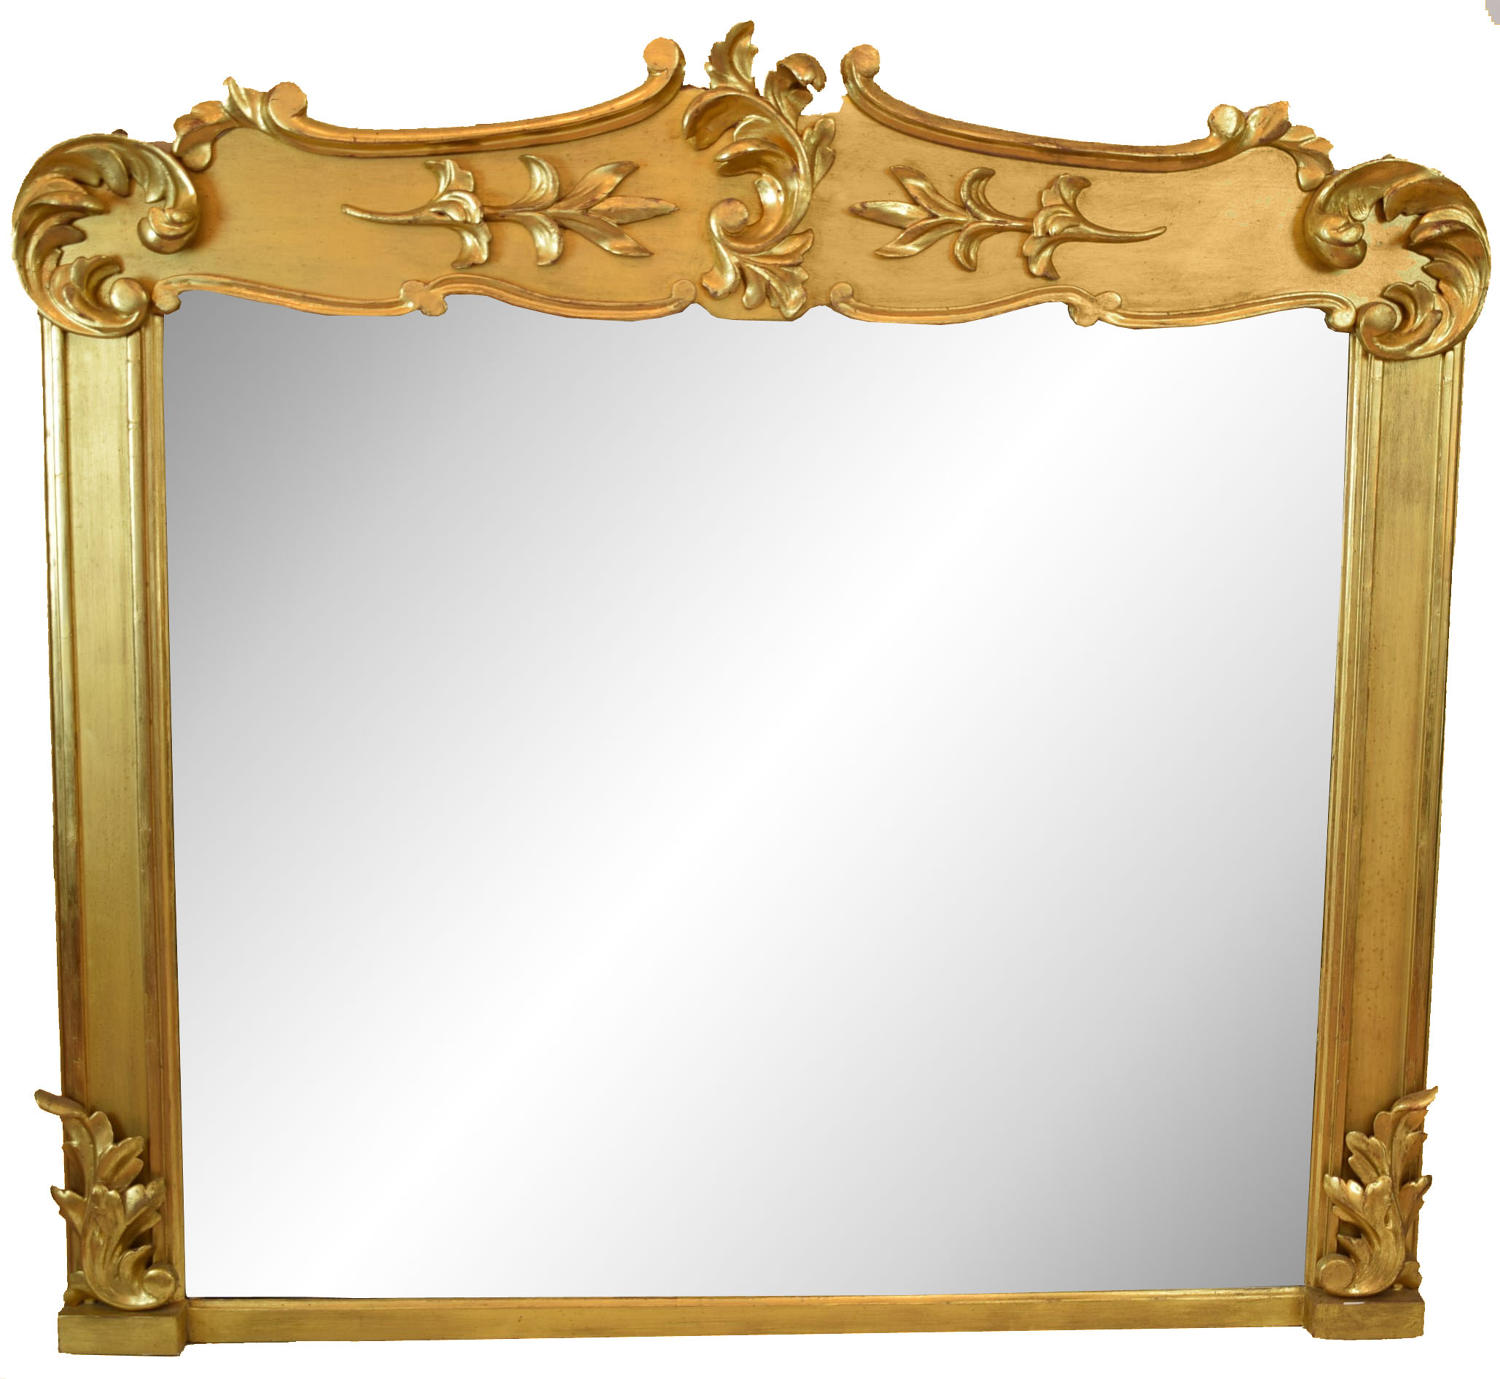 A rare Irish Antique gilded overmantle mirror